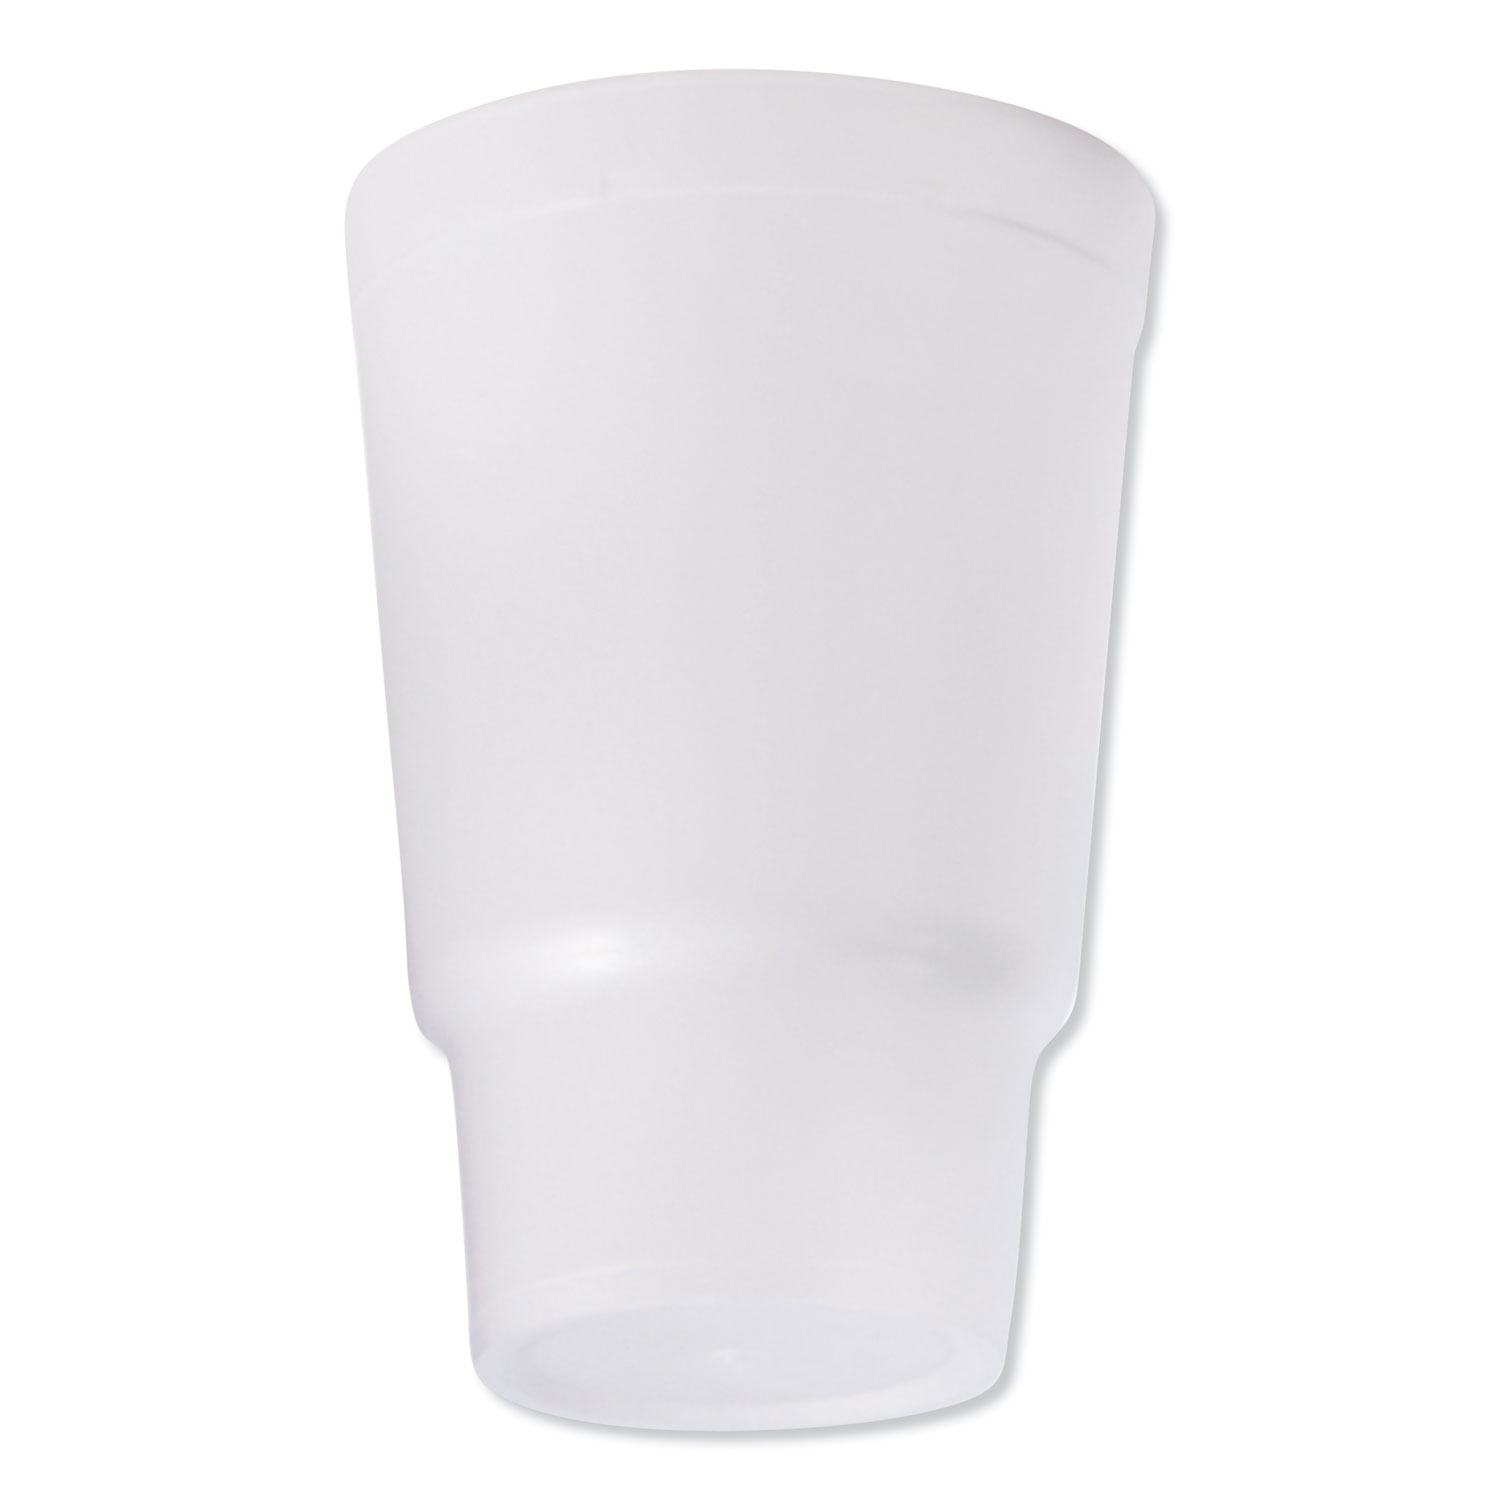  Dart 32AJ20 Foam Drink Cups, 32 oz, White, 16/Bag, 25 Bags/Carton (DCC32AJ20) 